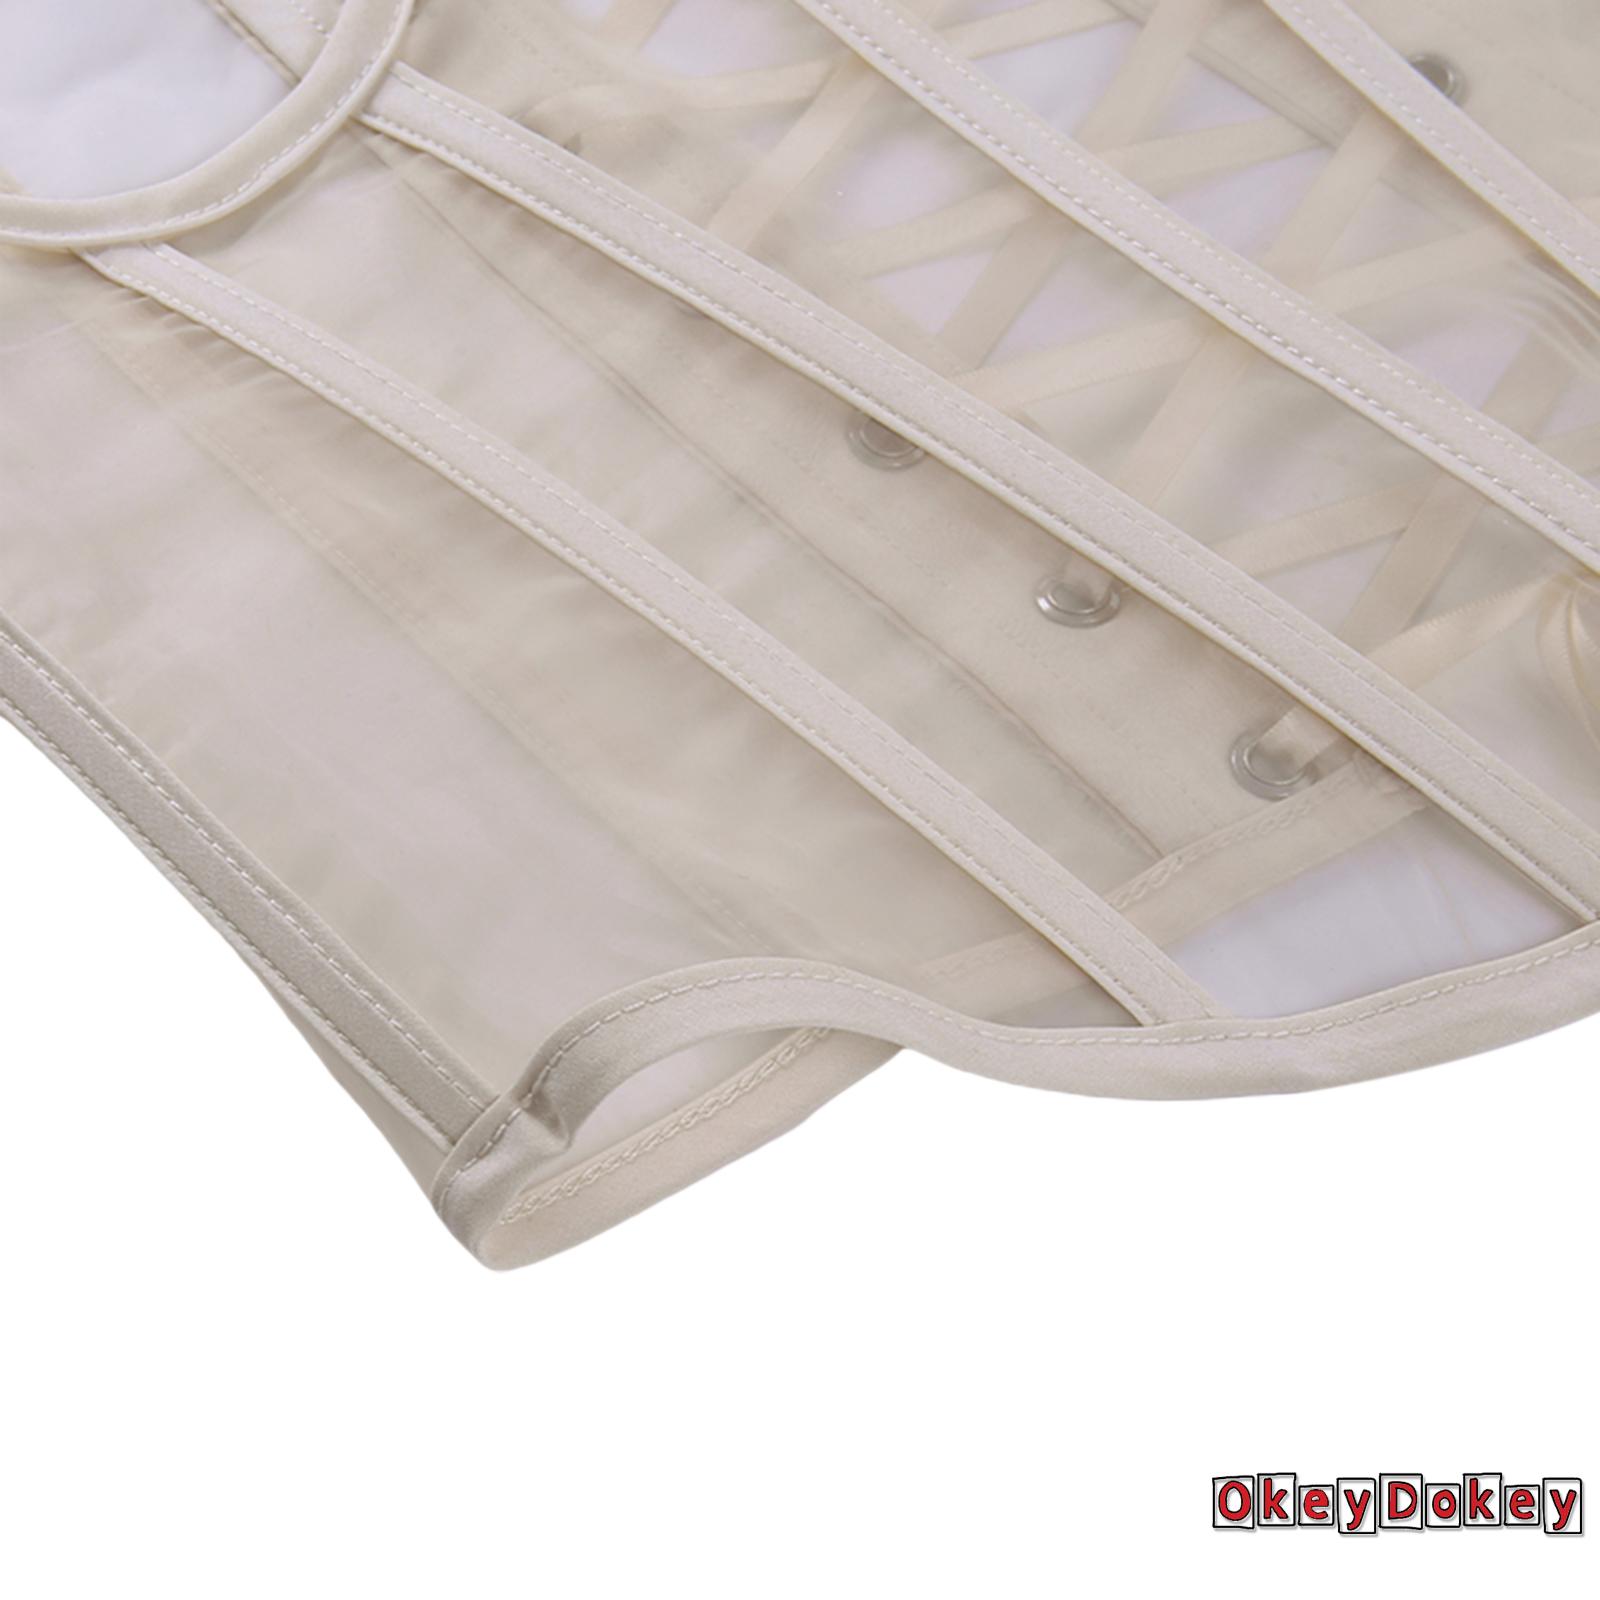 OKDK-Female Shapewear, Solid Color Boob Tube Top Waist Cinchers Body Shaper for Women, Apricot/White, S/M/L